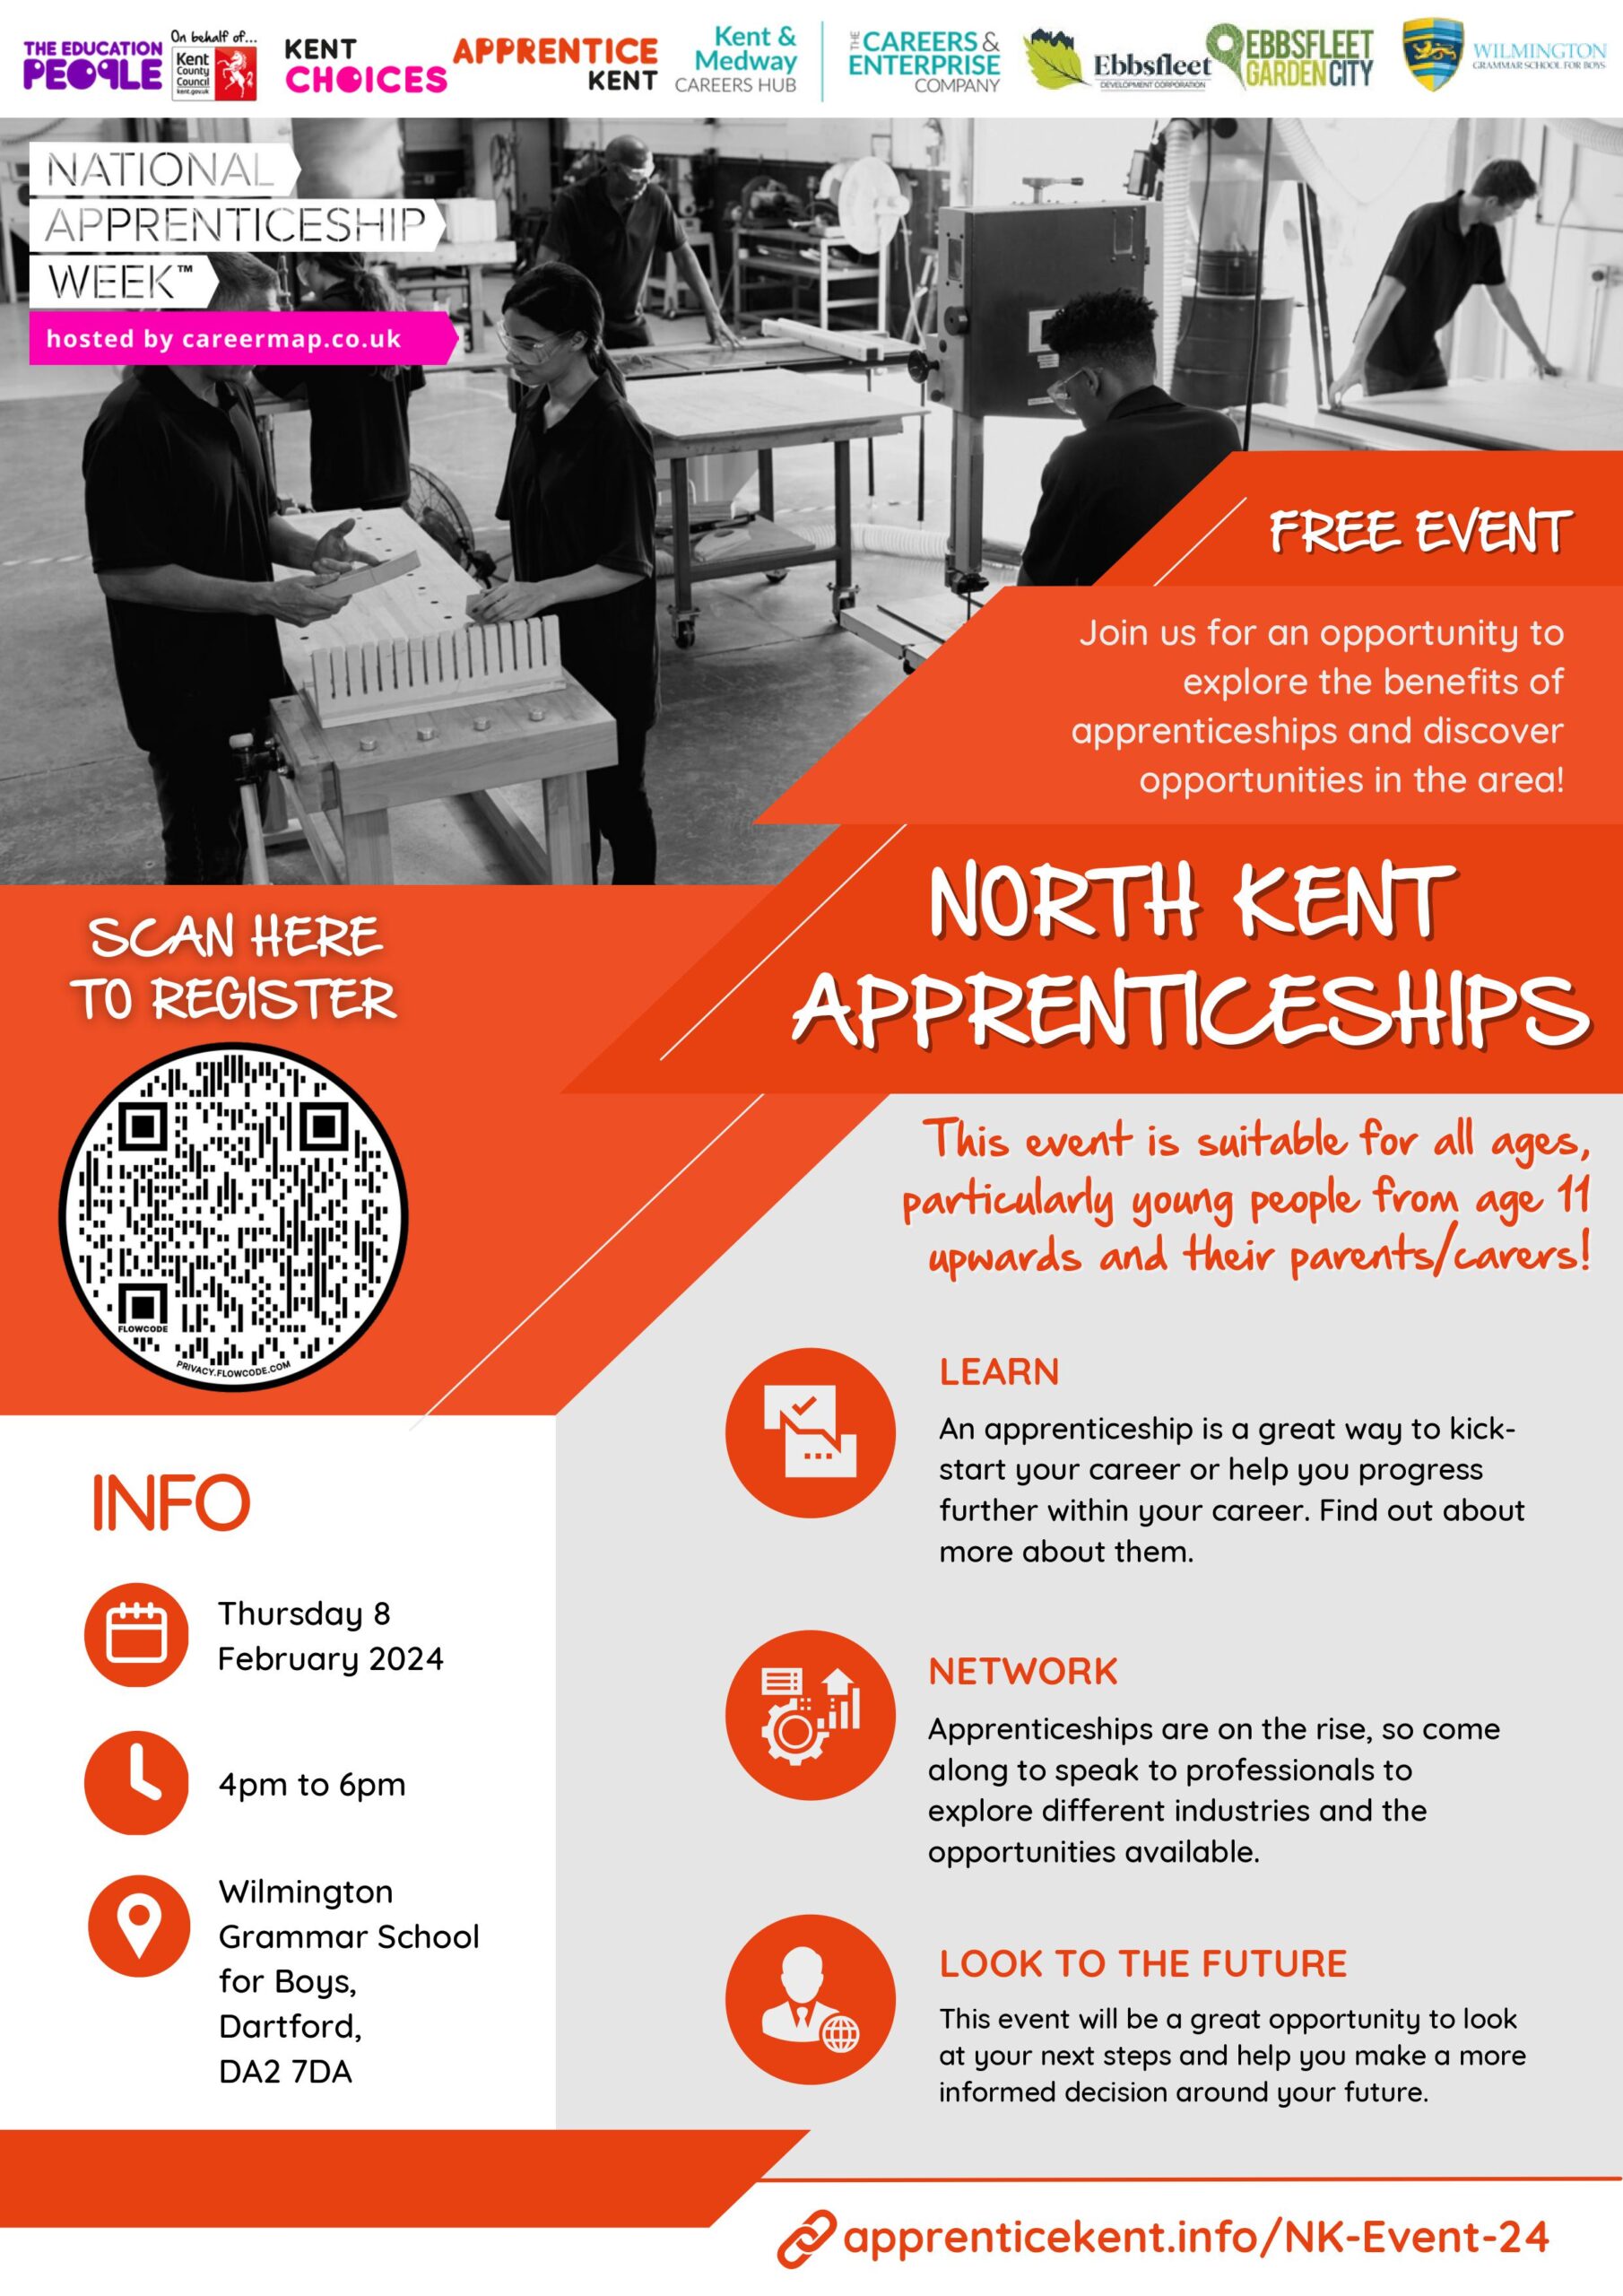 North Kent Apprenticeships Free Event